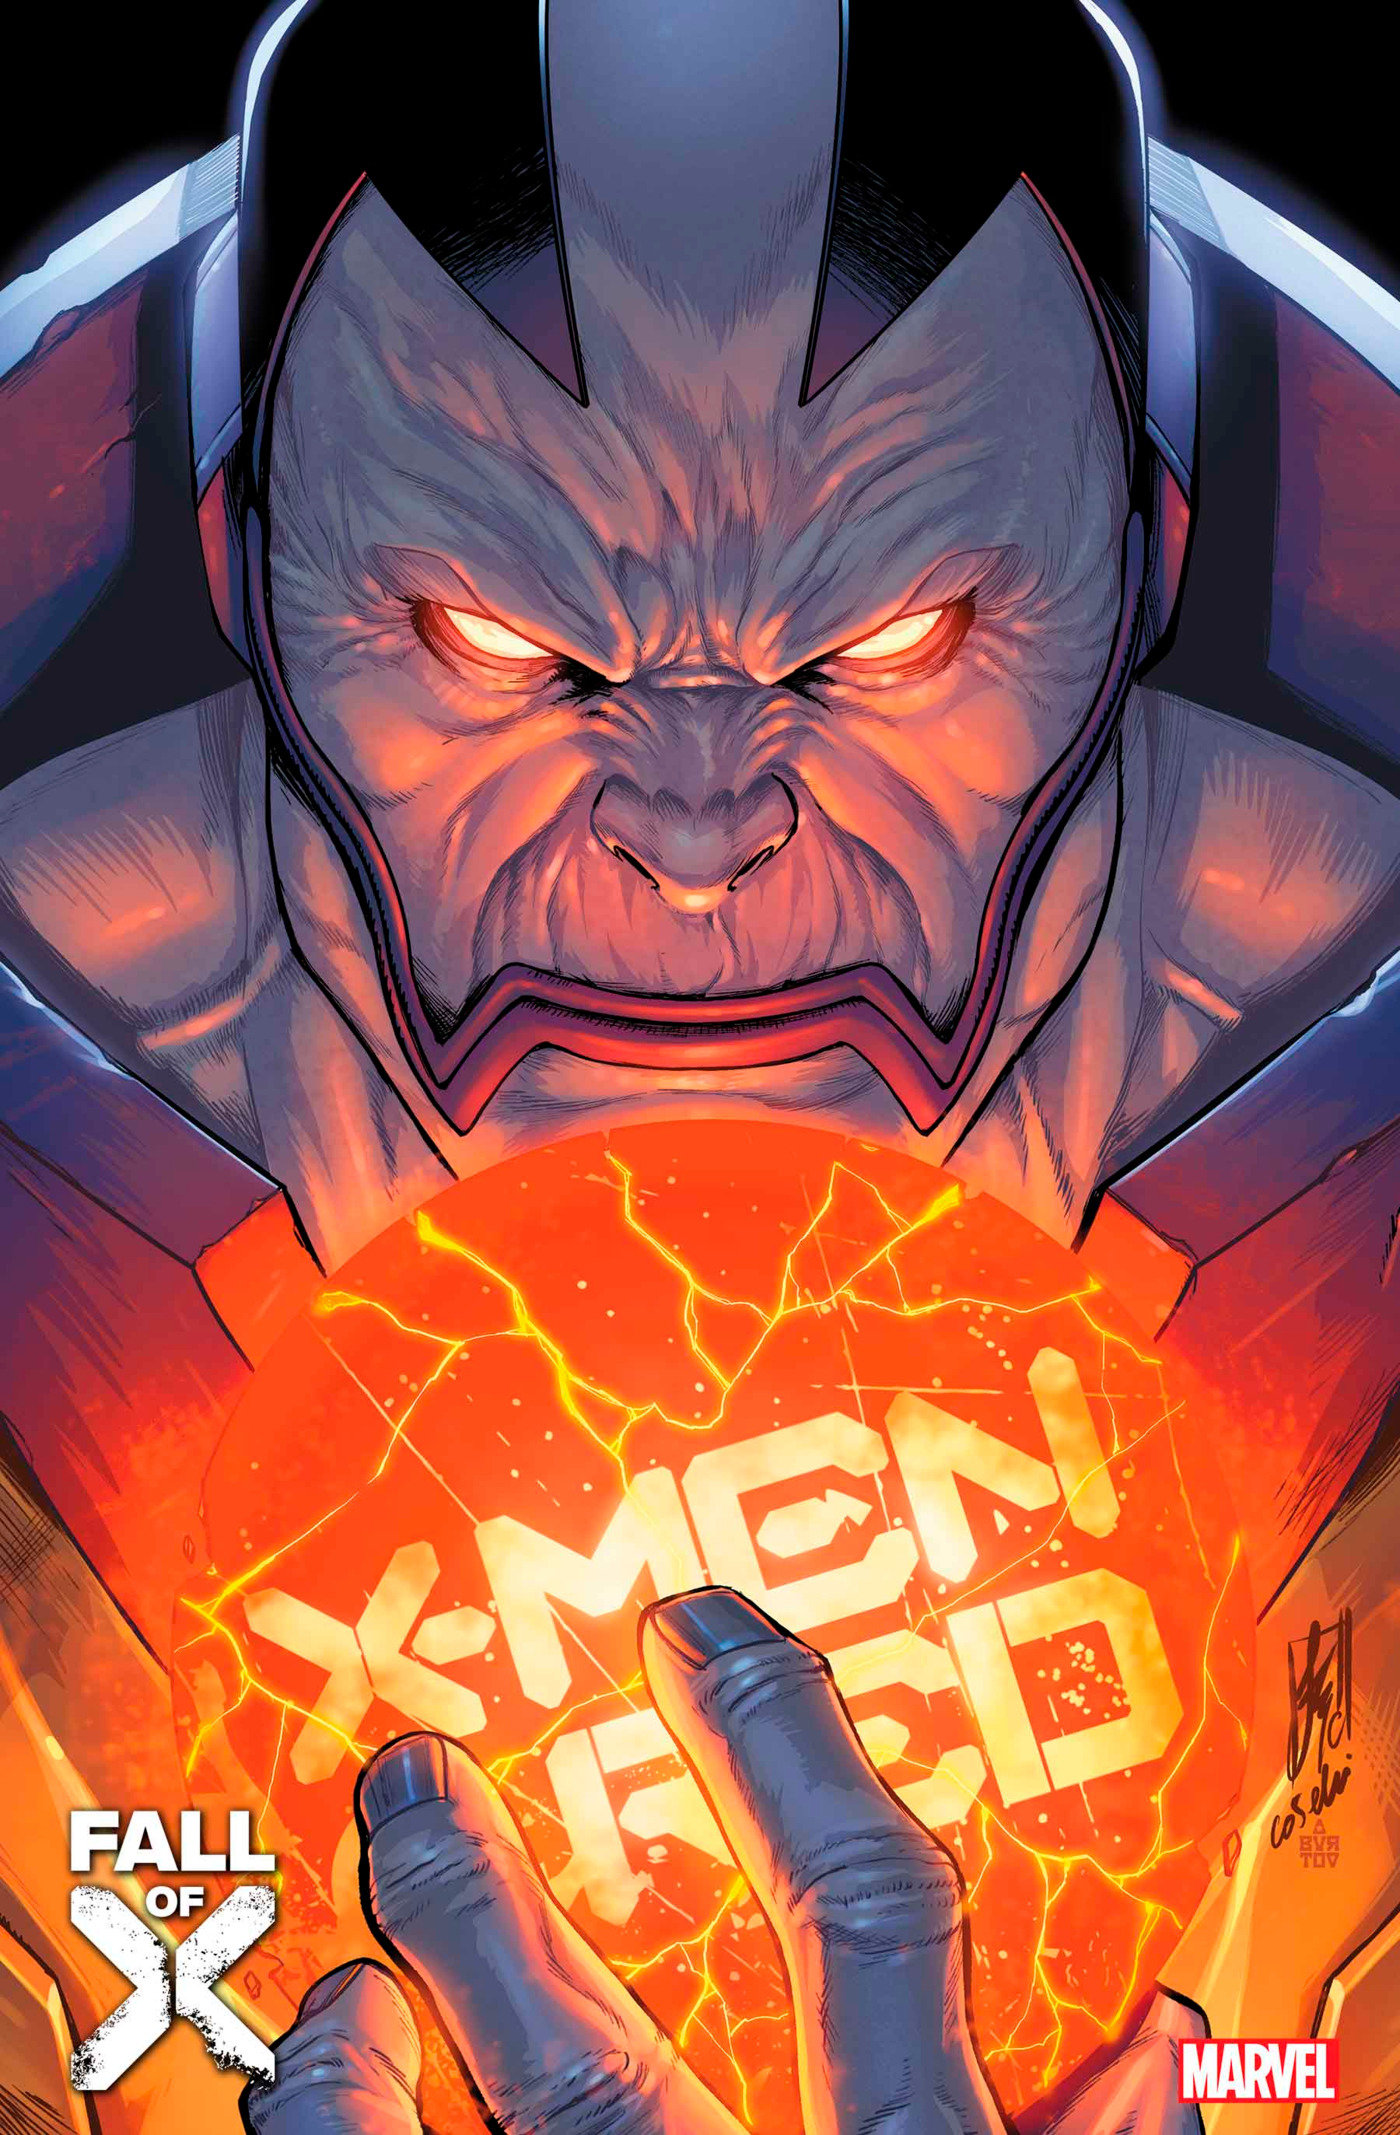 X-Men Red #17 (Fall of X)